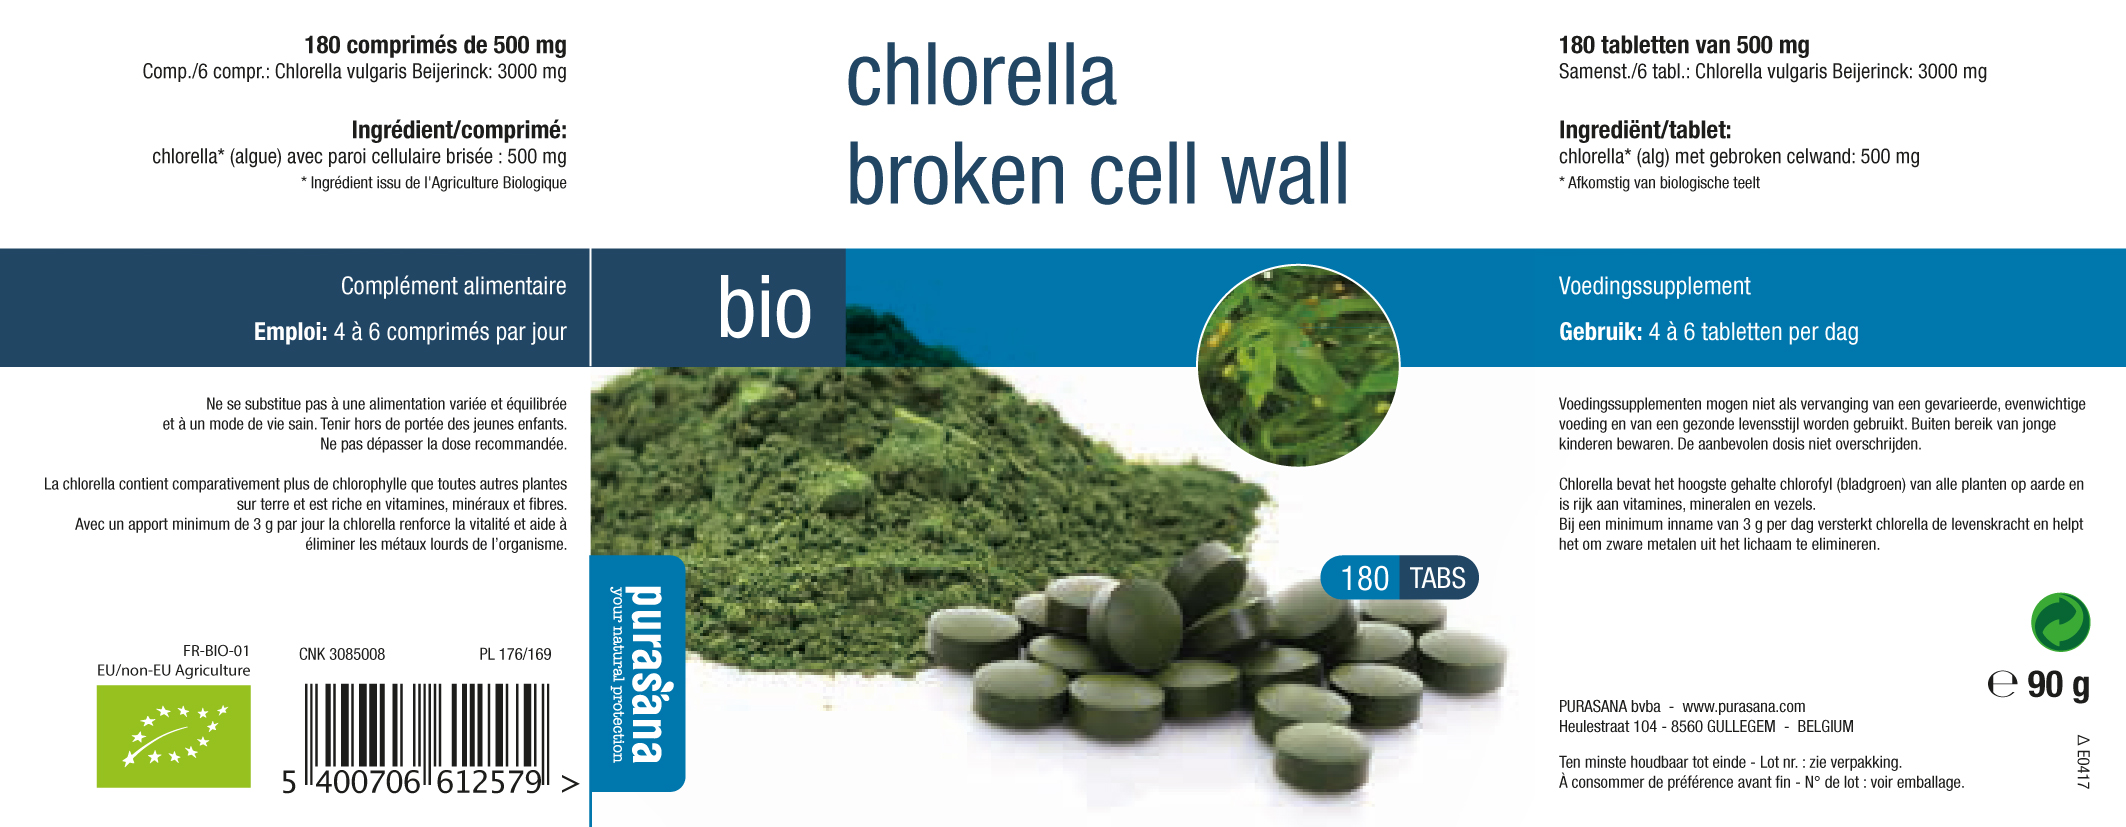 chlorella tabletten verpakking